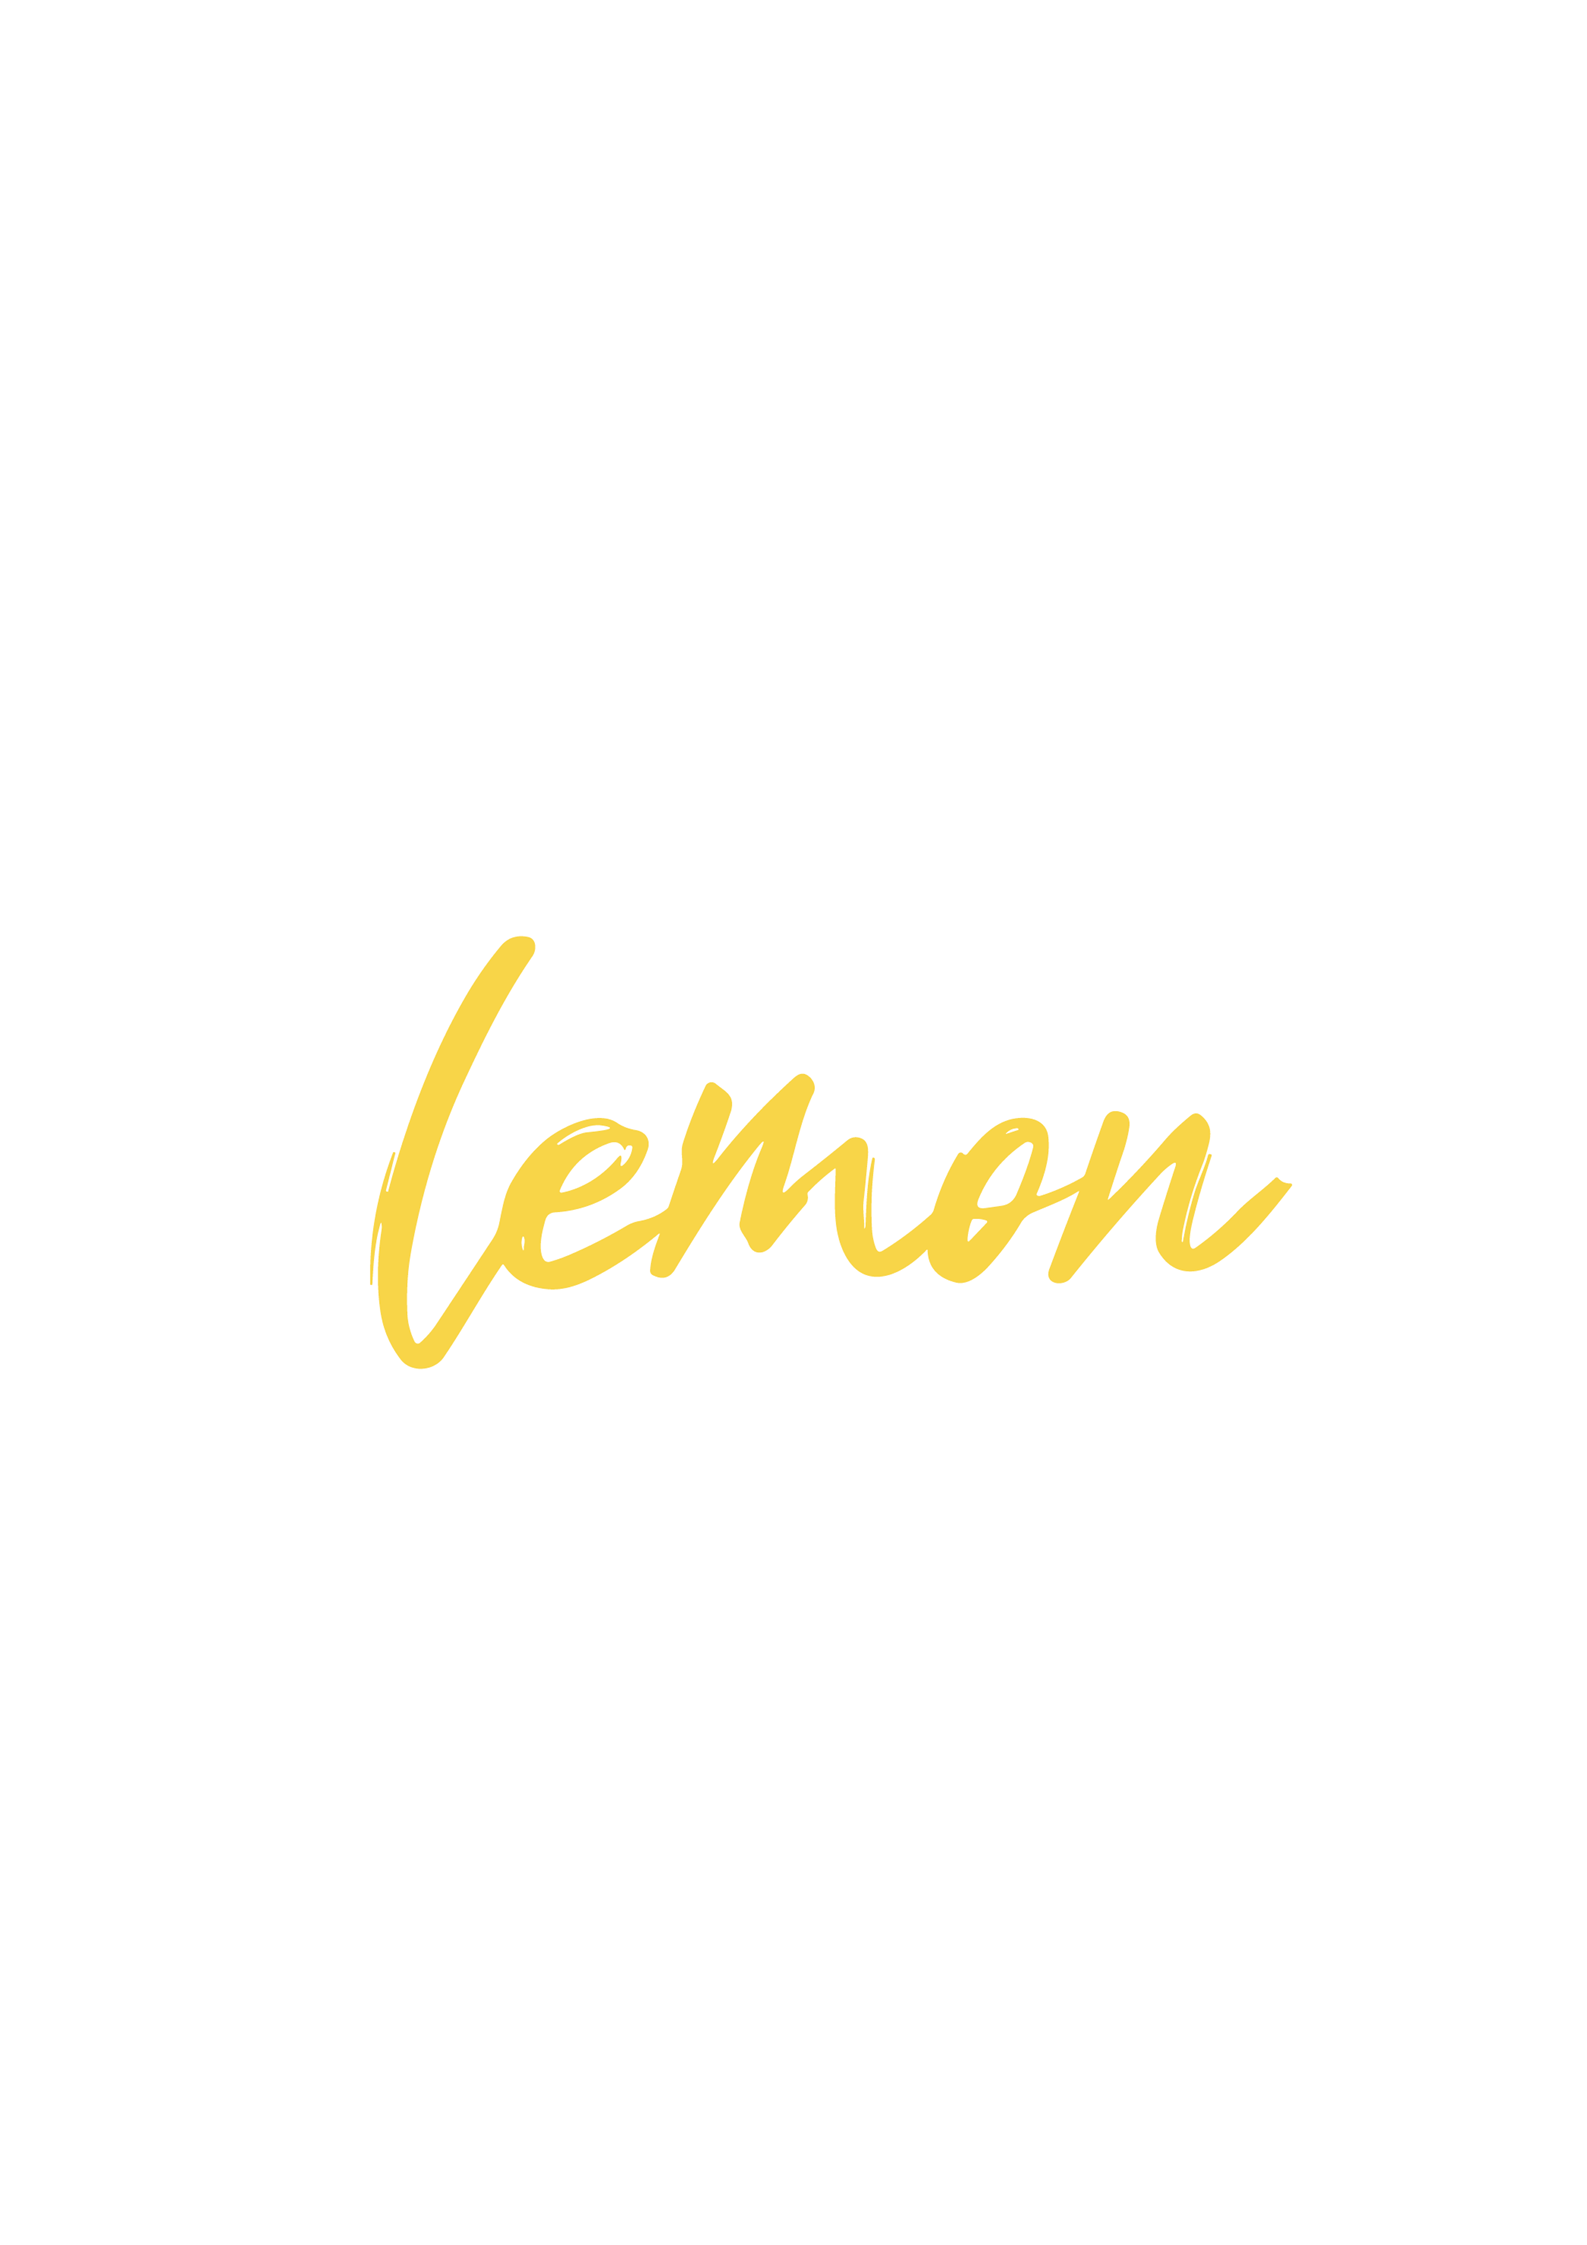 ccfcf846 lemon temp poster ttw